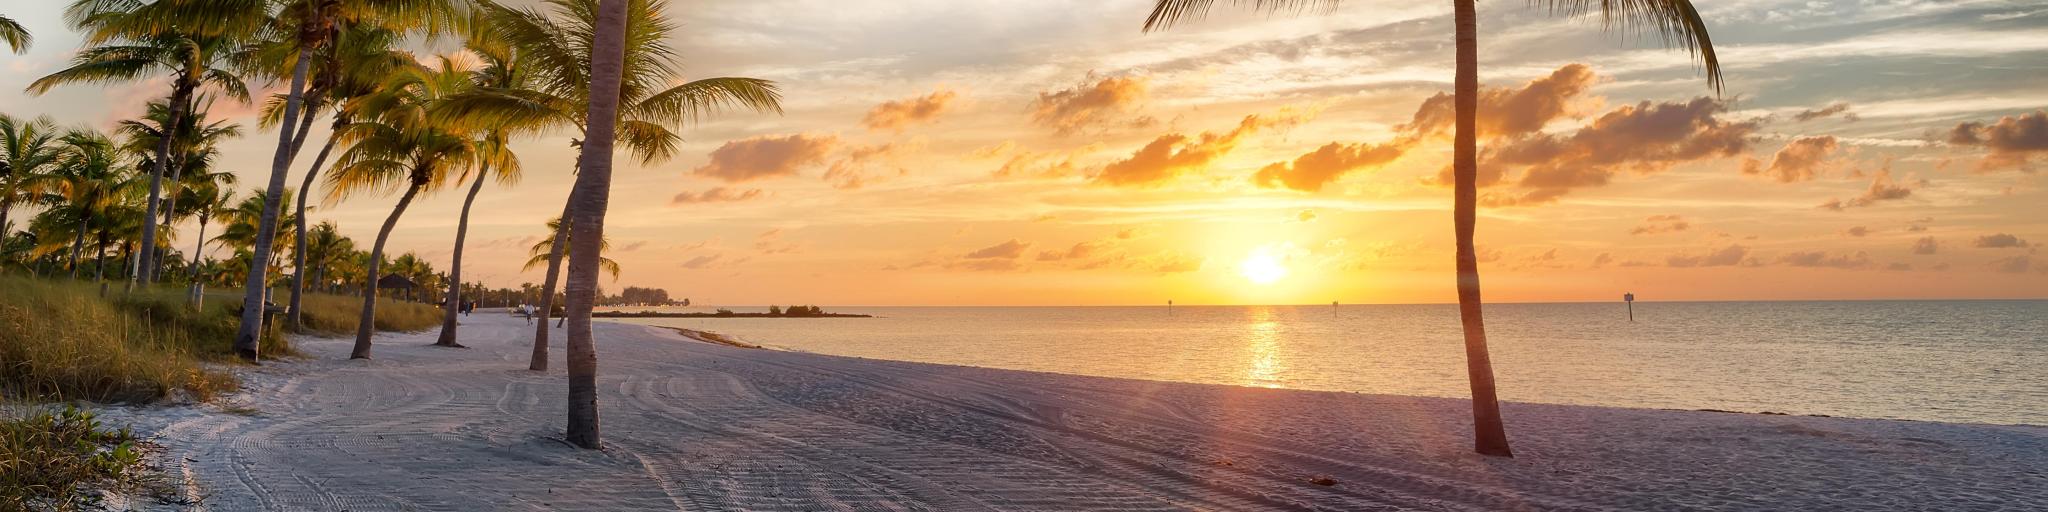 Sunrise on the Smathers Beach with palm trees - Key West, Florida